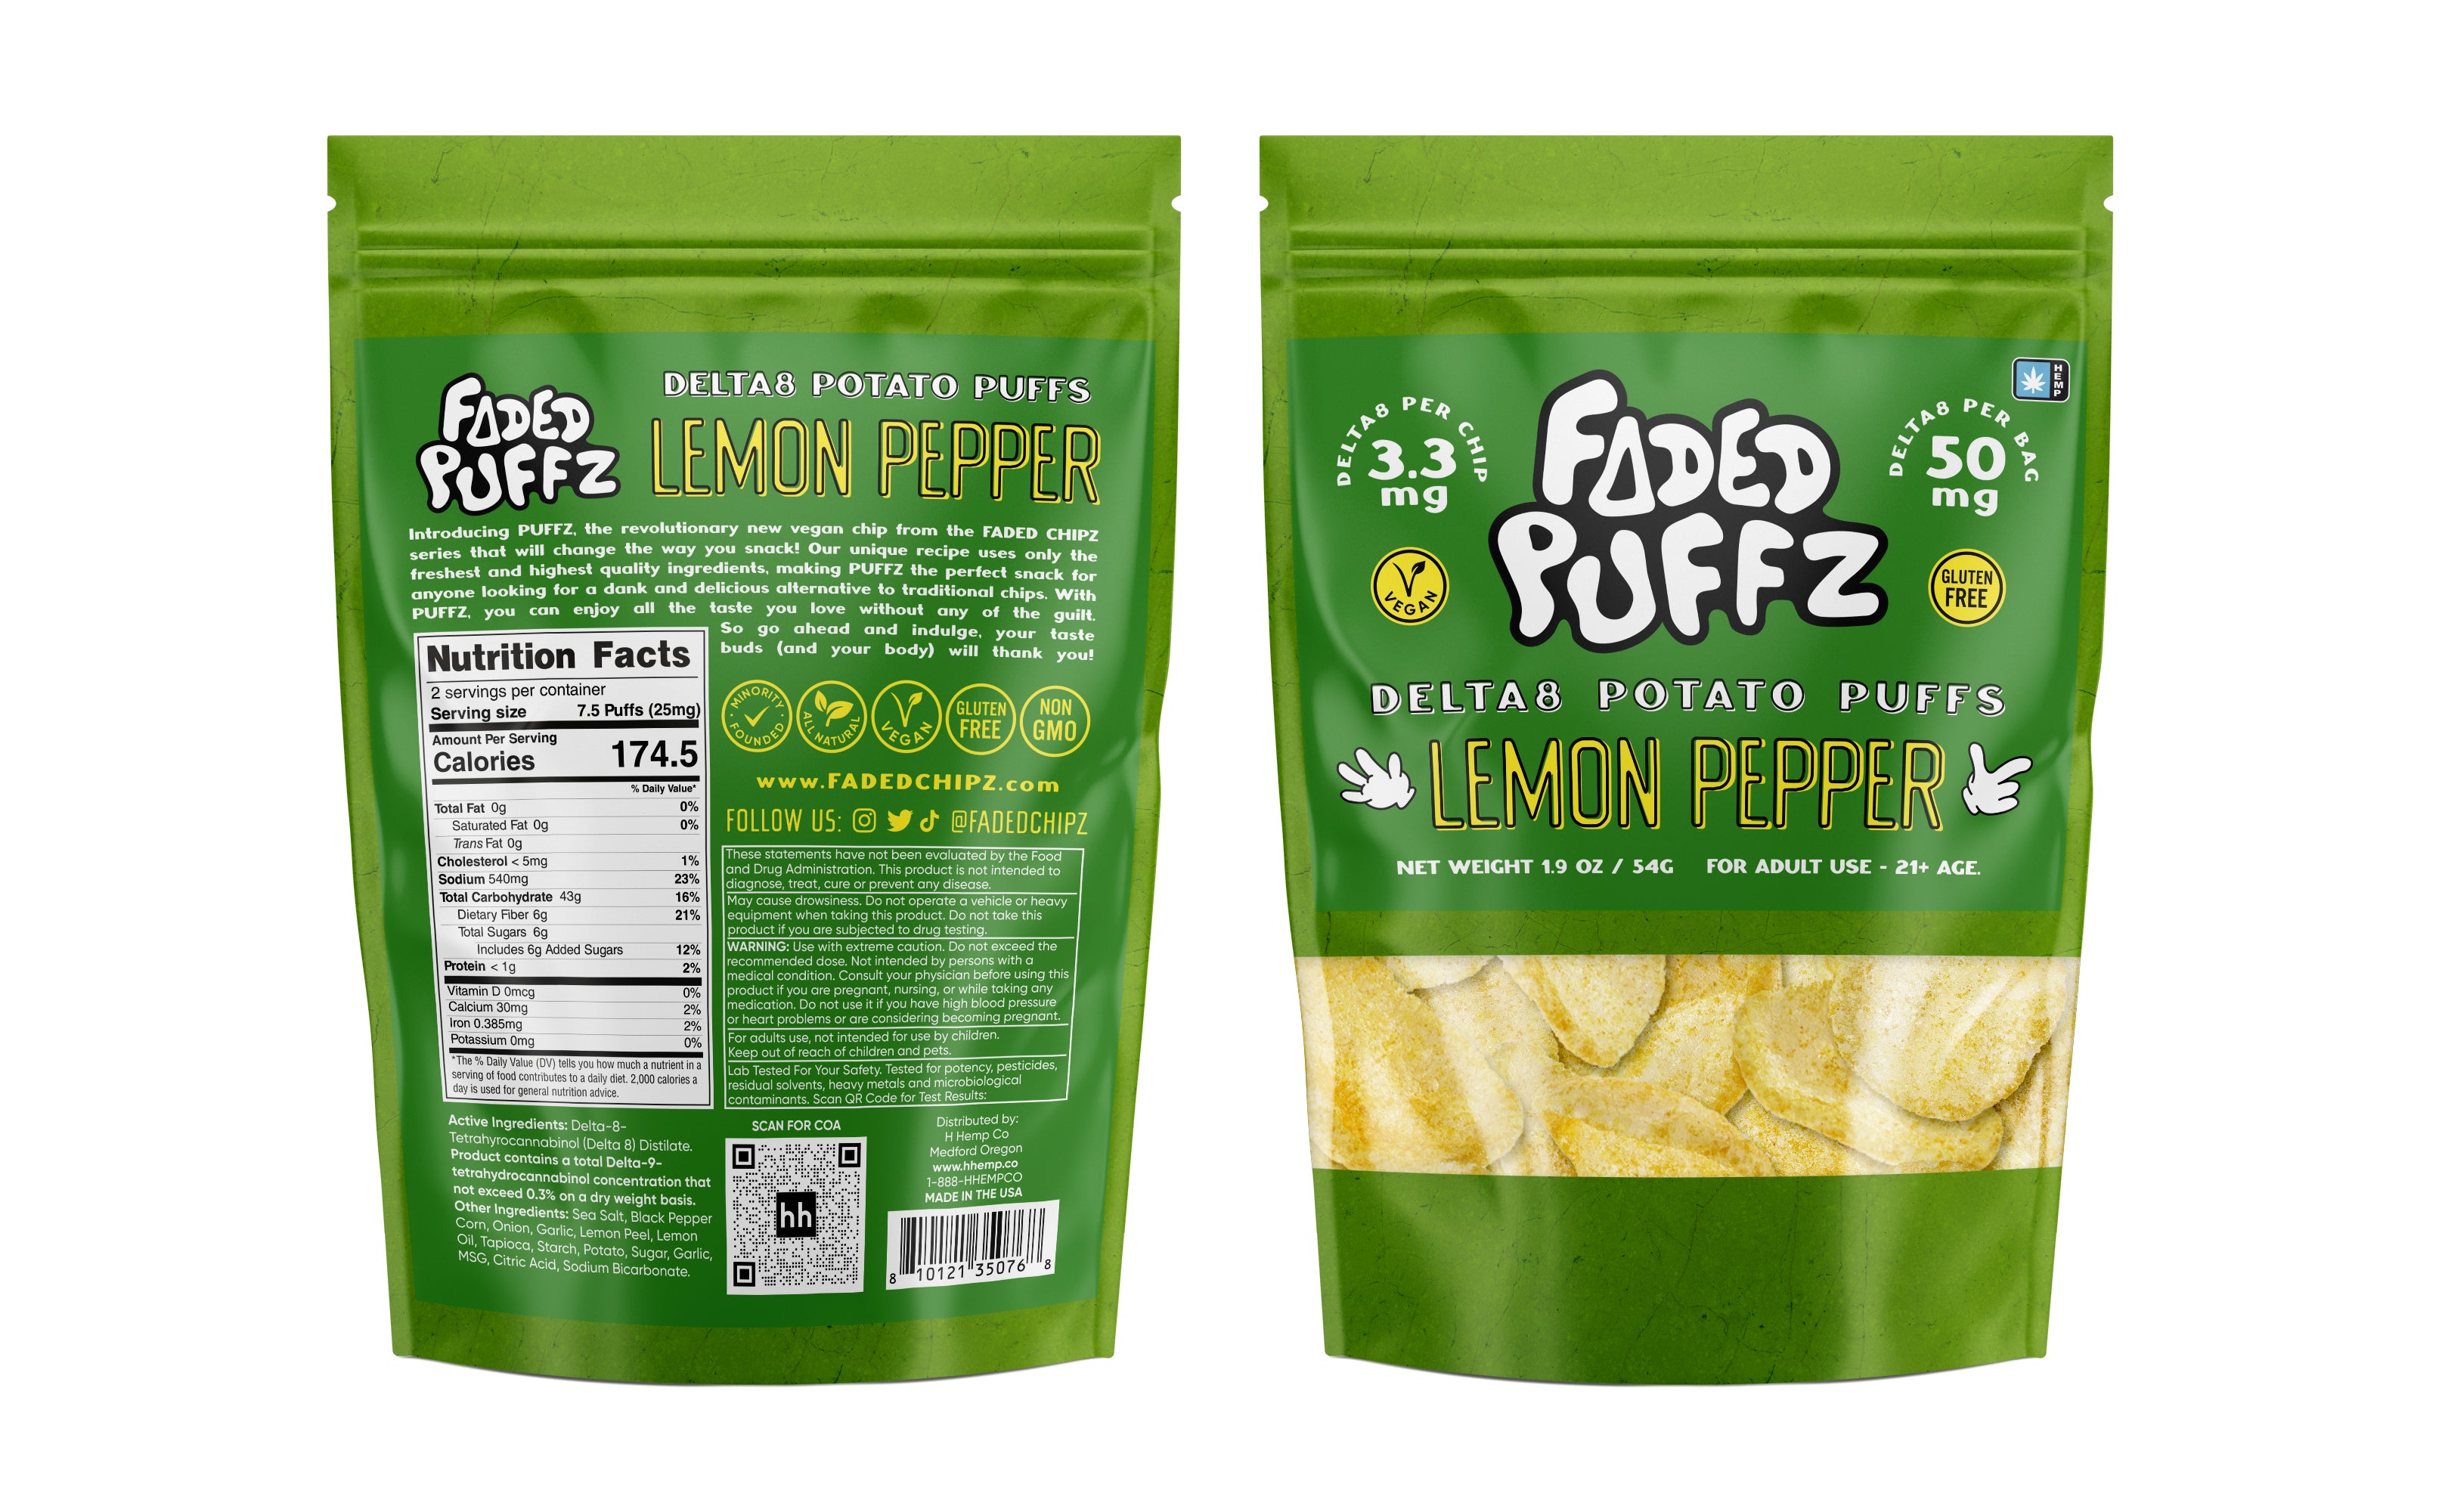 Faded Puffz Delta8 Potato Chips 50mg - Lemon Pepper (25ct)